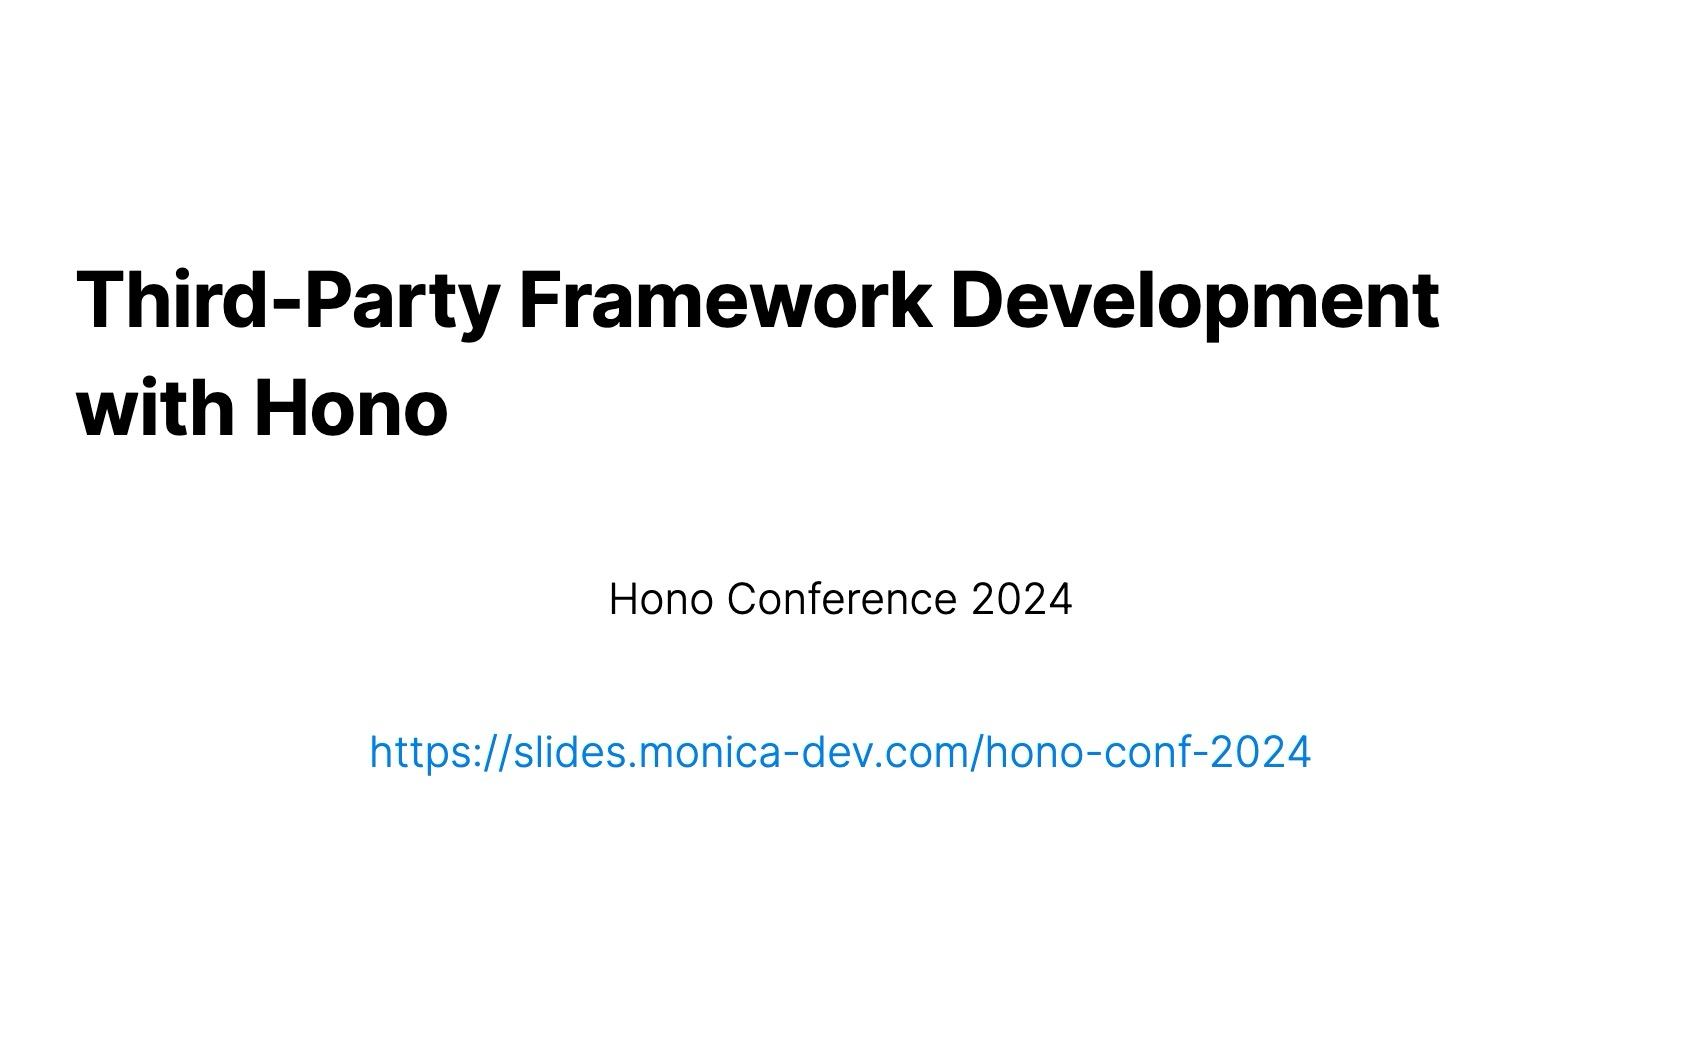 Third-Party Framework Development with Hono